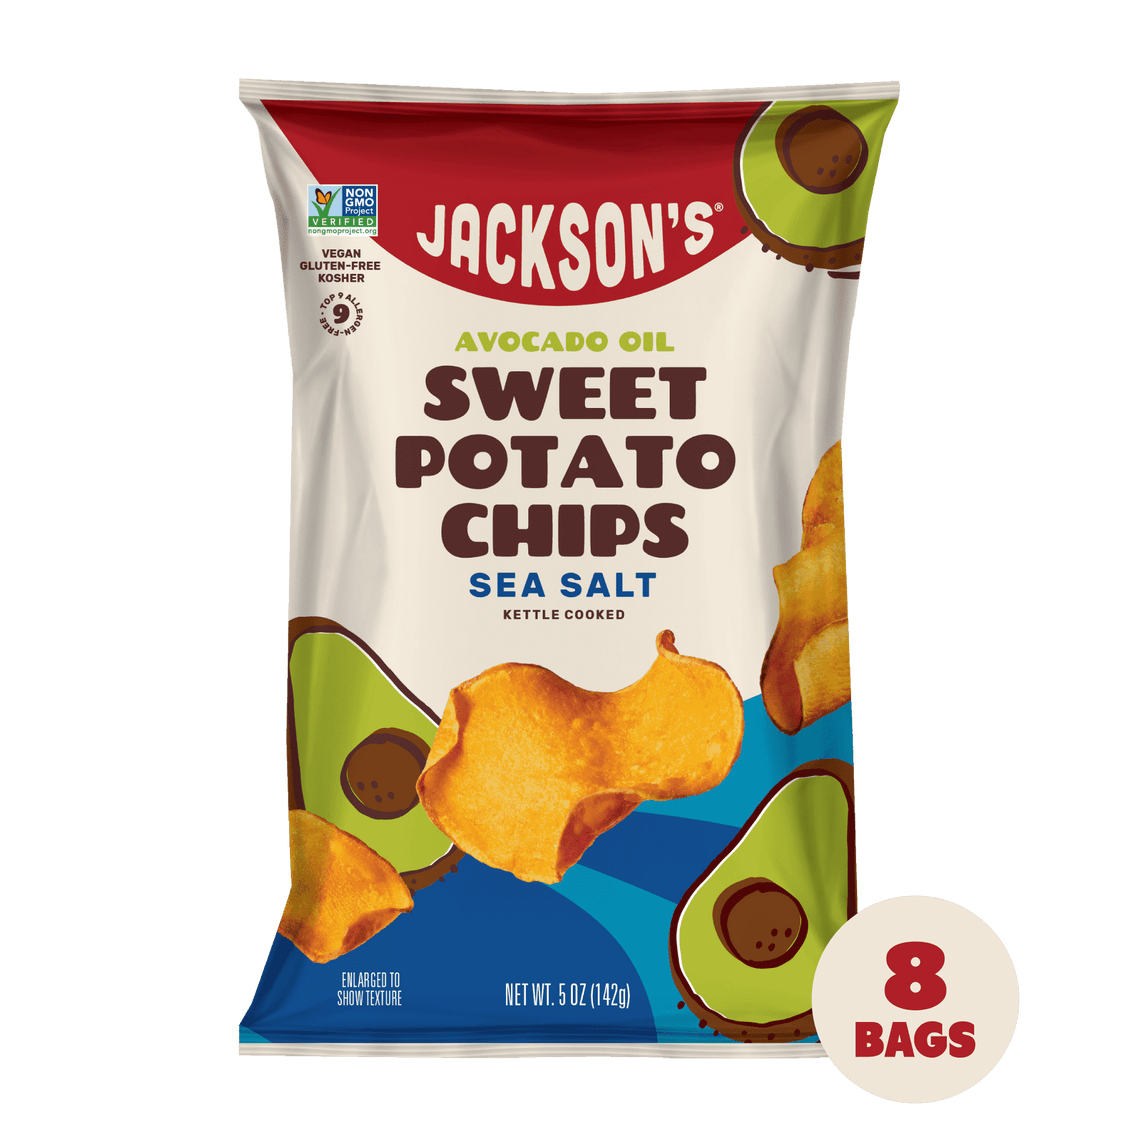 Jackson's Sea Salt Sweet Potato Kettle Chips in Avocado Oil 5oz - 8 Bags. Dairy-free & Paleo